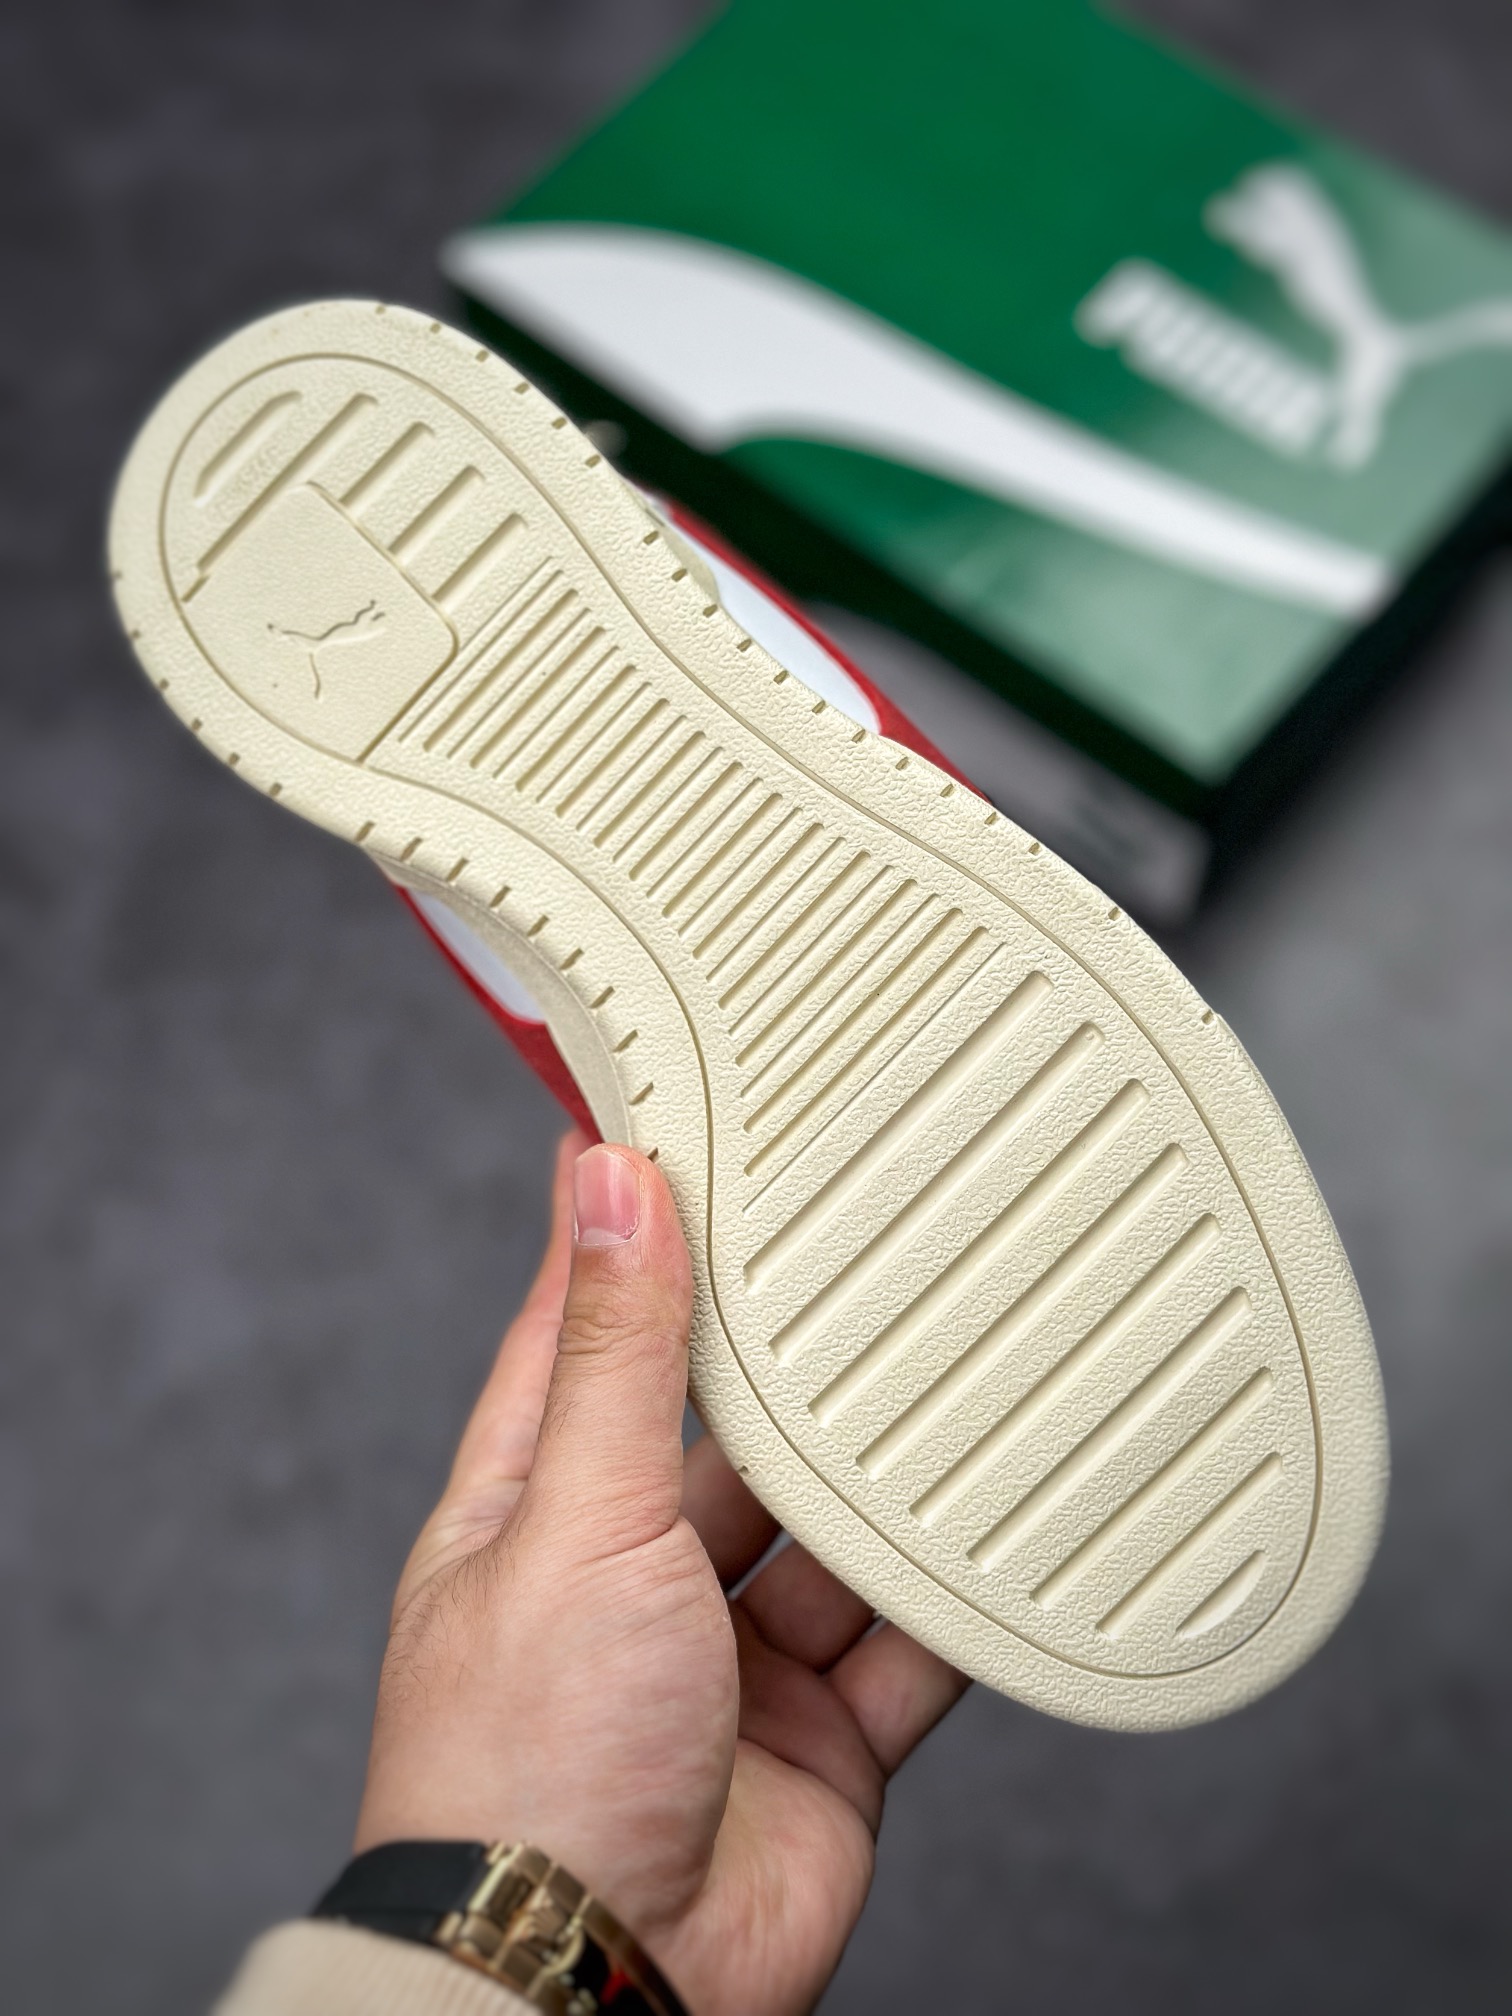 / PUMA CA Pro lvy League wear-resistant non-slip low top casual sneakers 388556-02